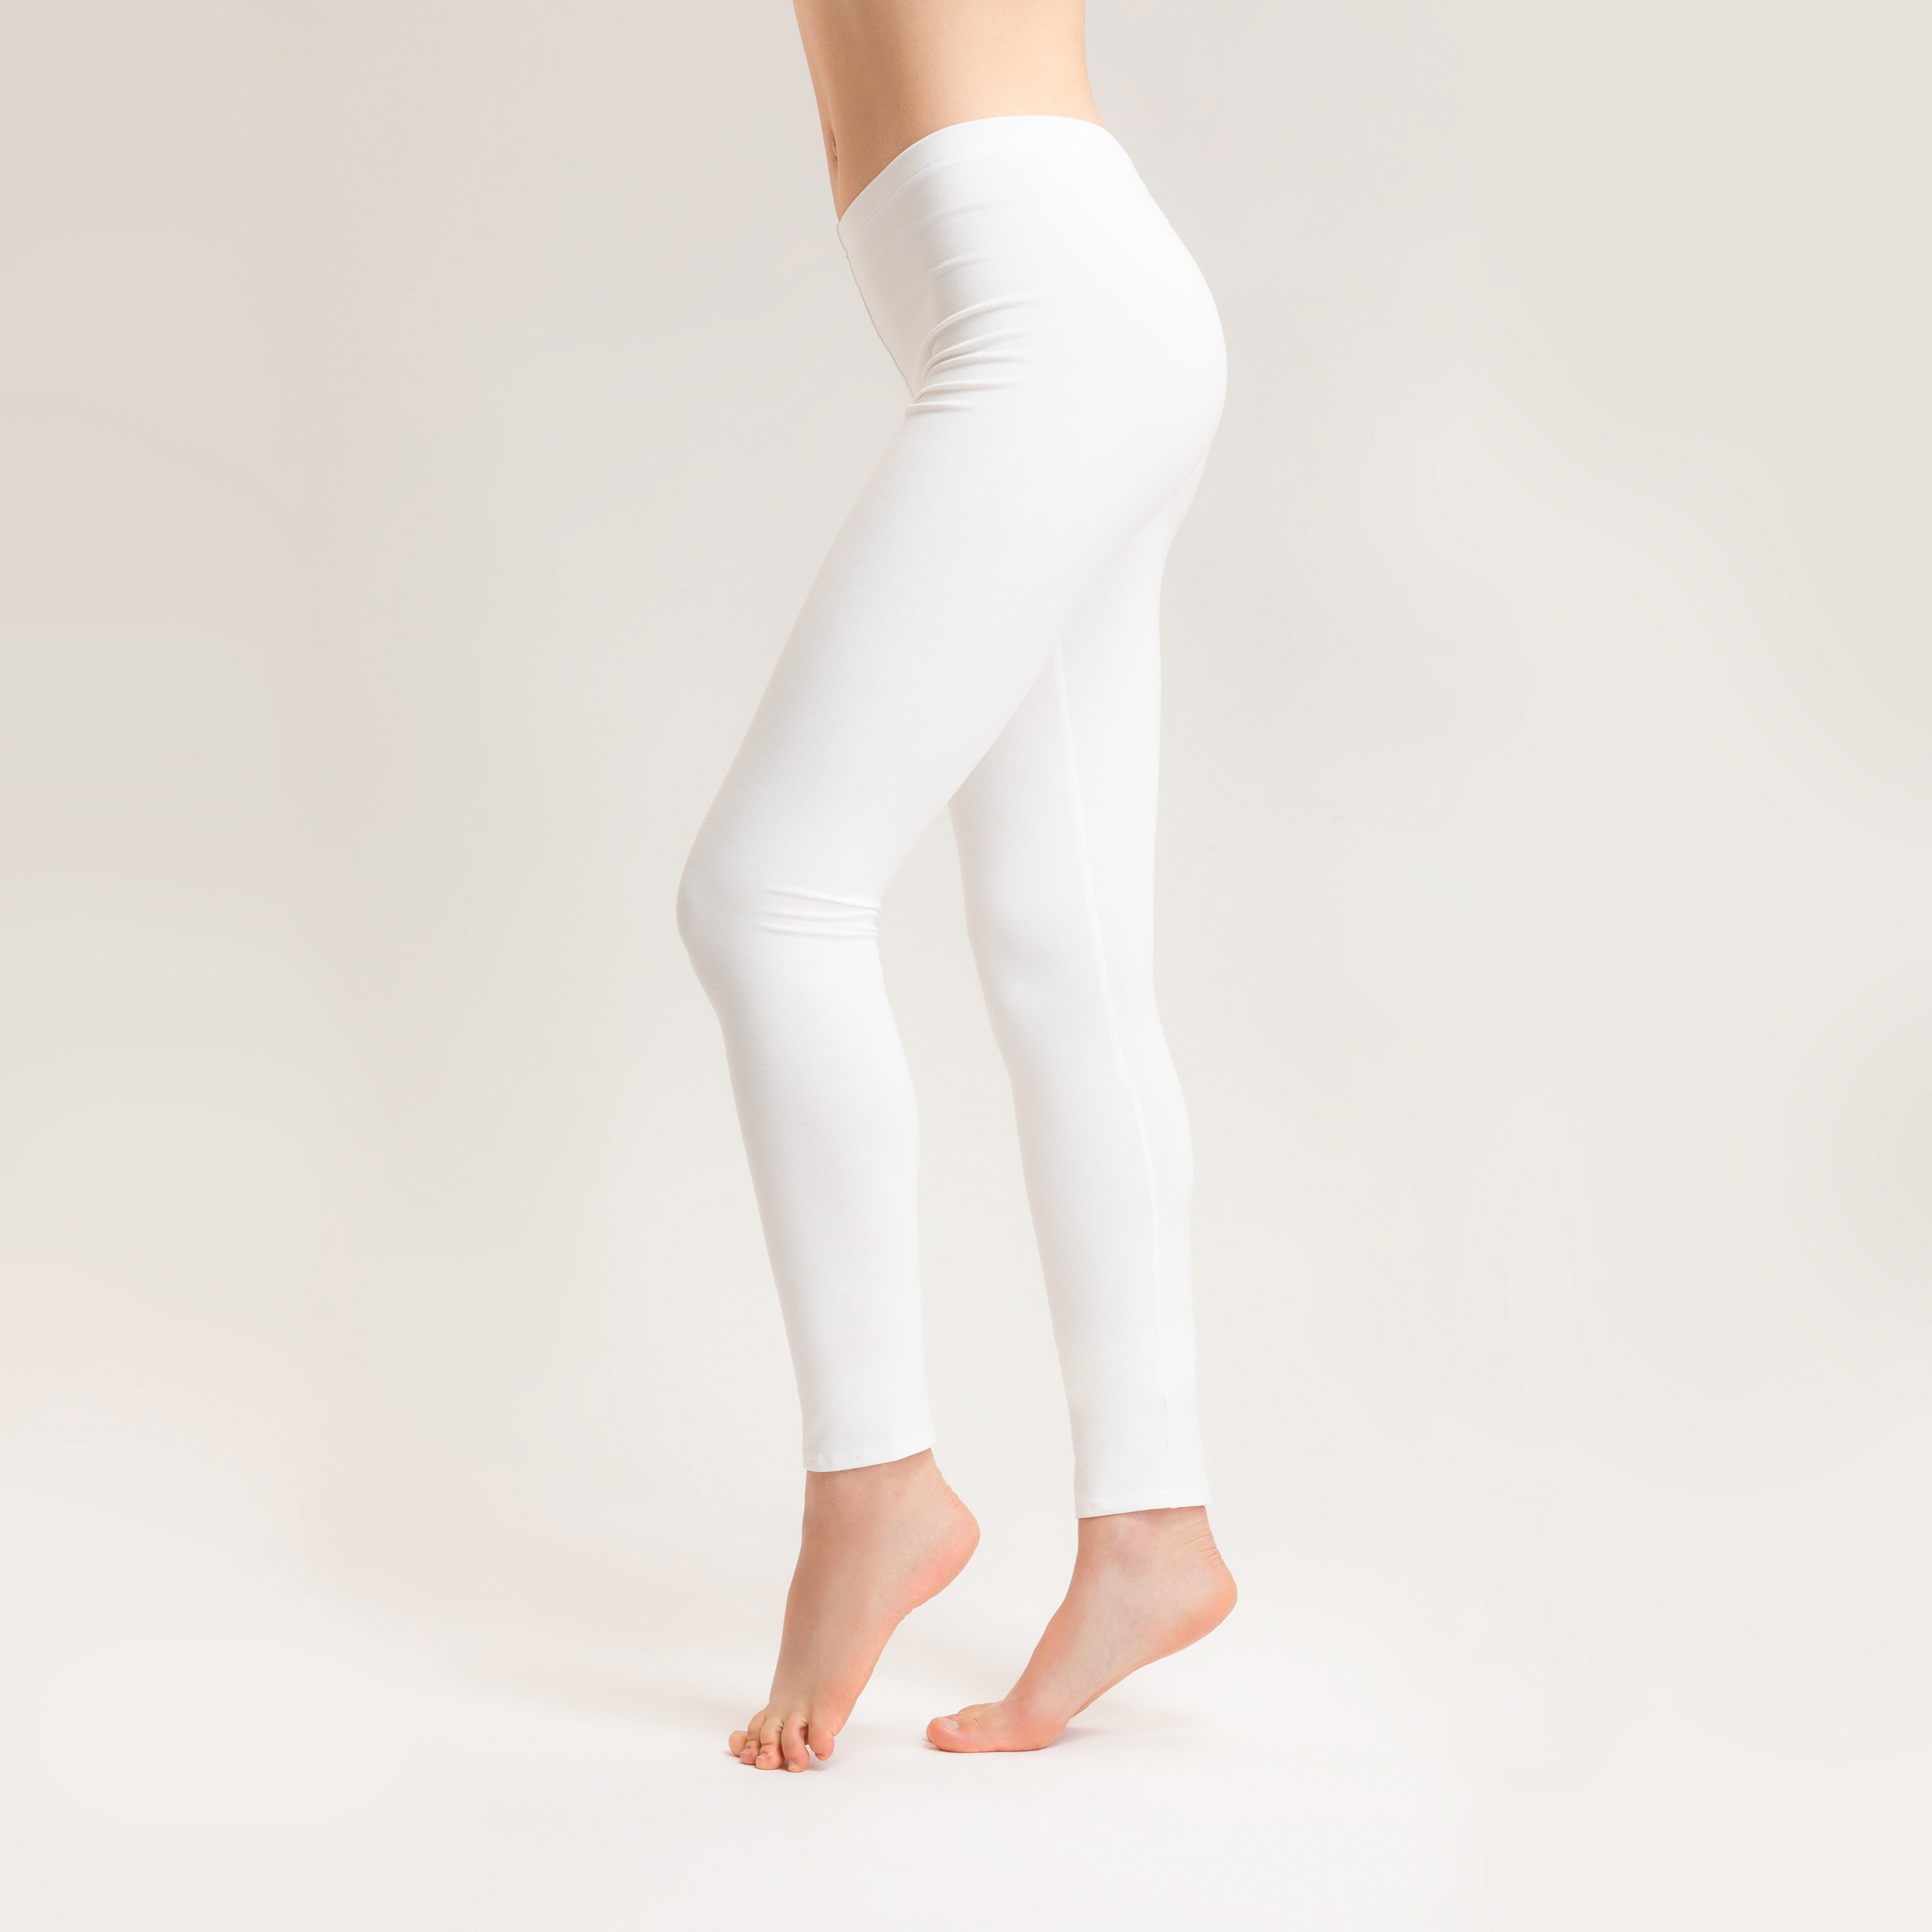 White Leggings / White Yoga Pants / Low Rise Leggings / Womens